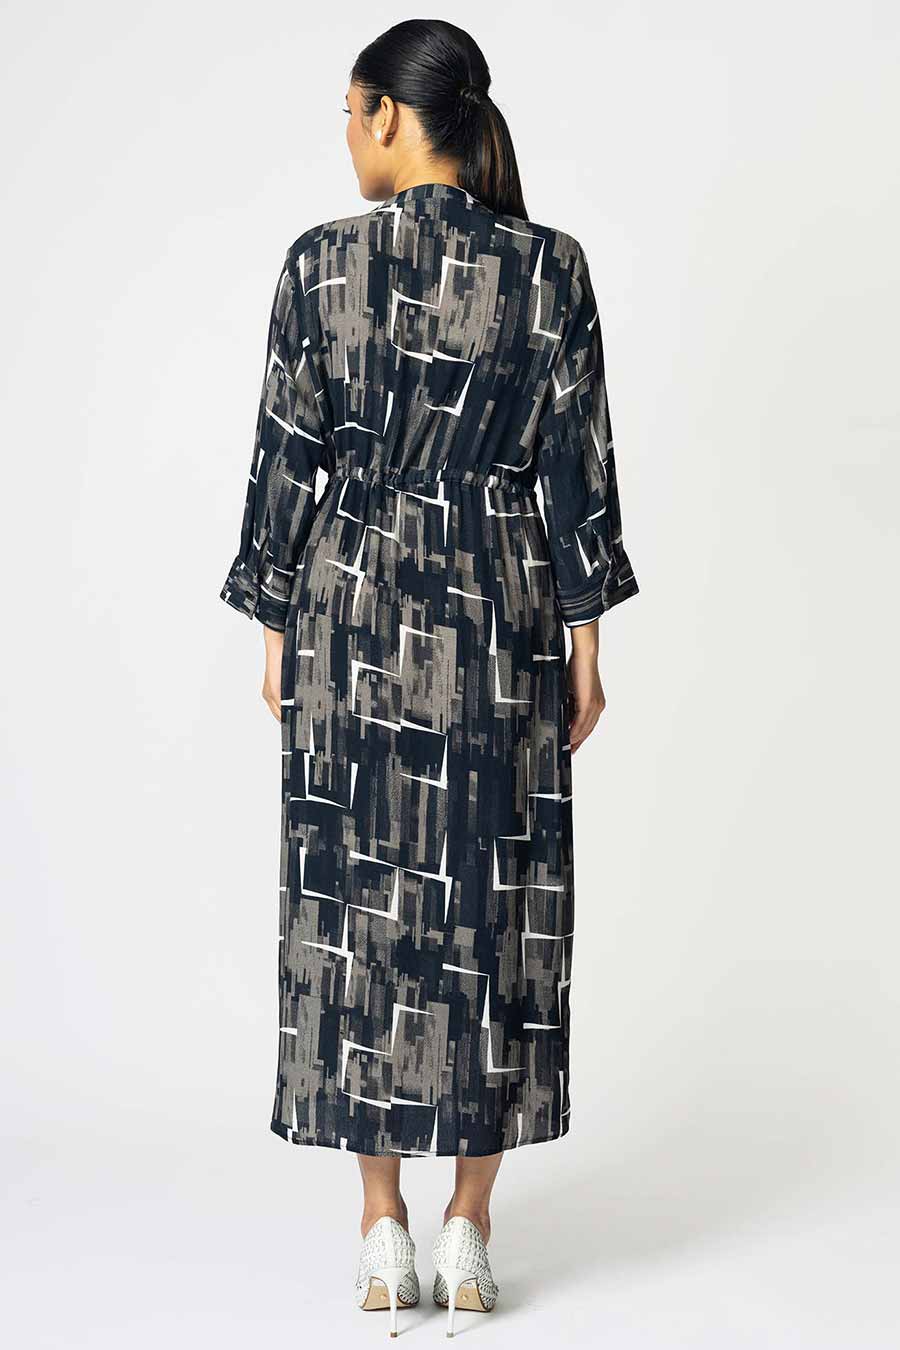 Black Rhombus Printed Drawstring Dress